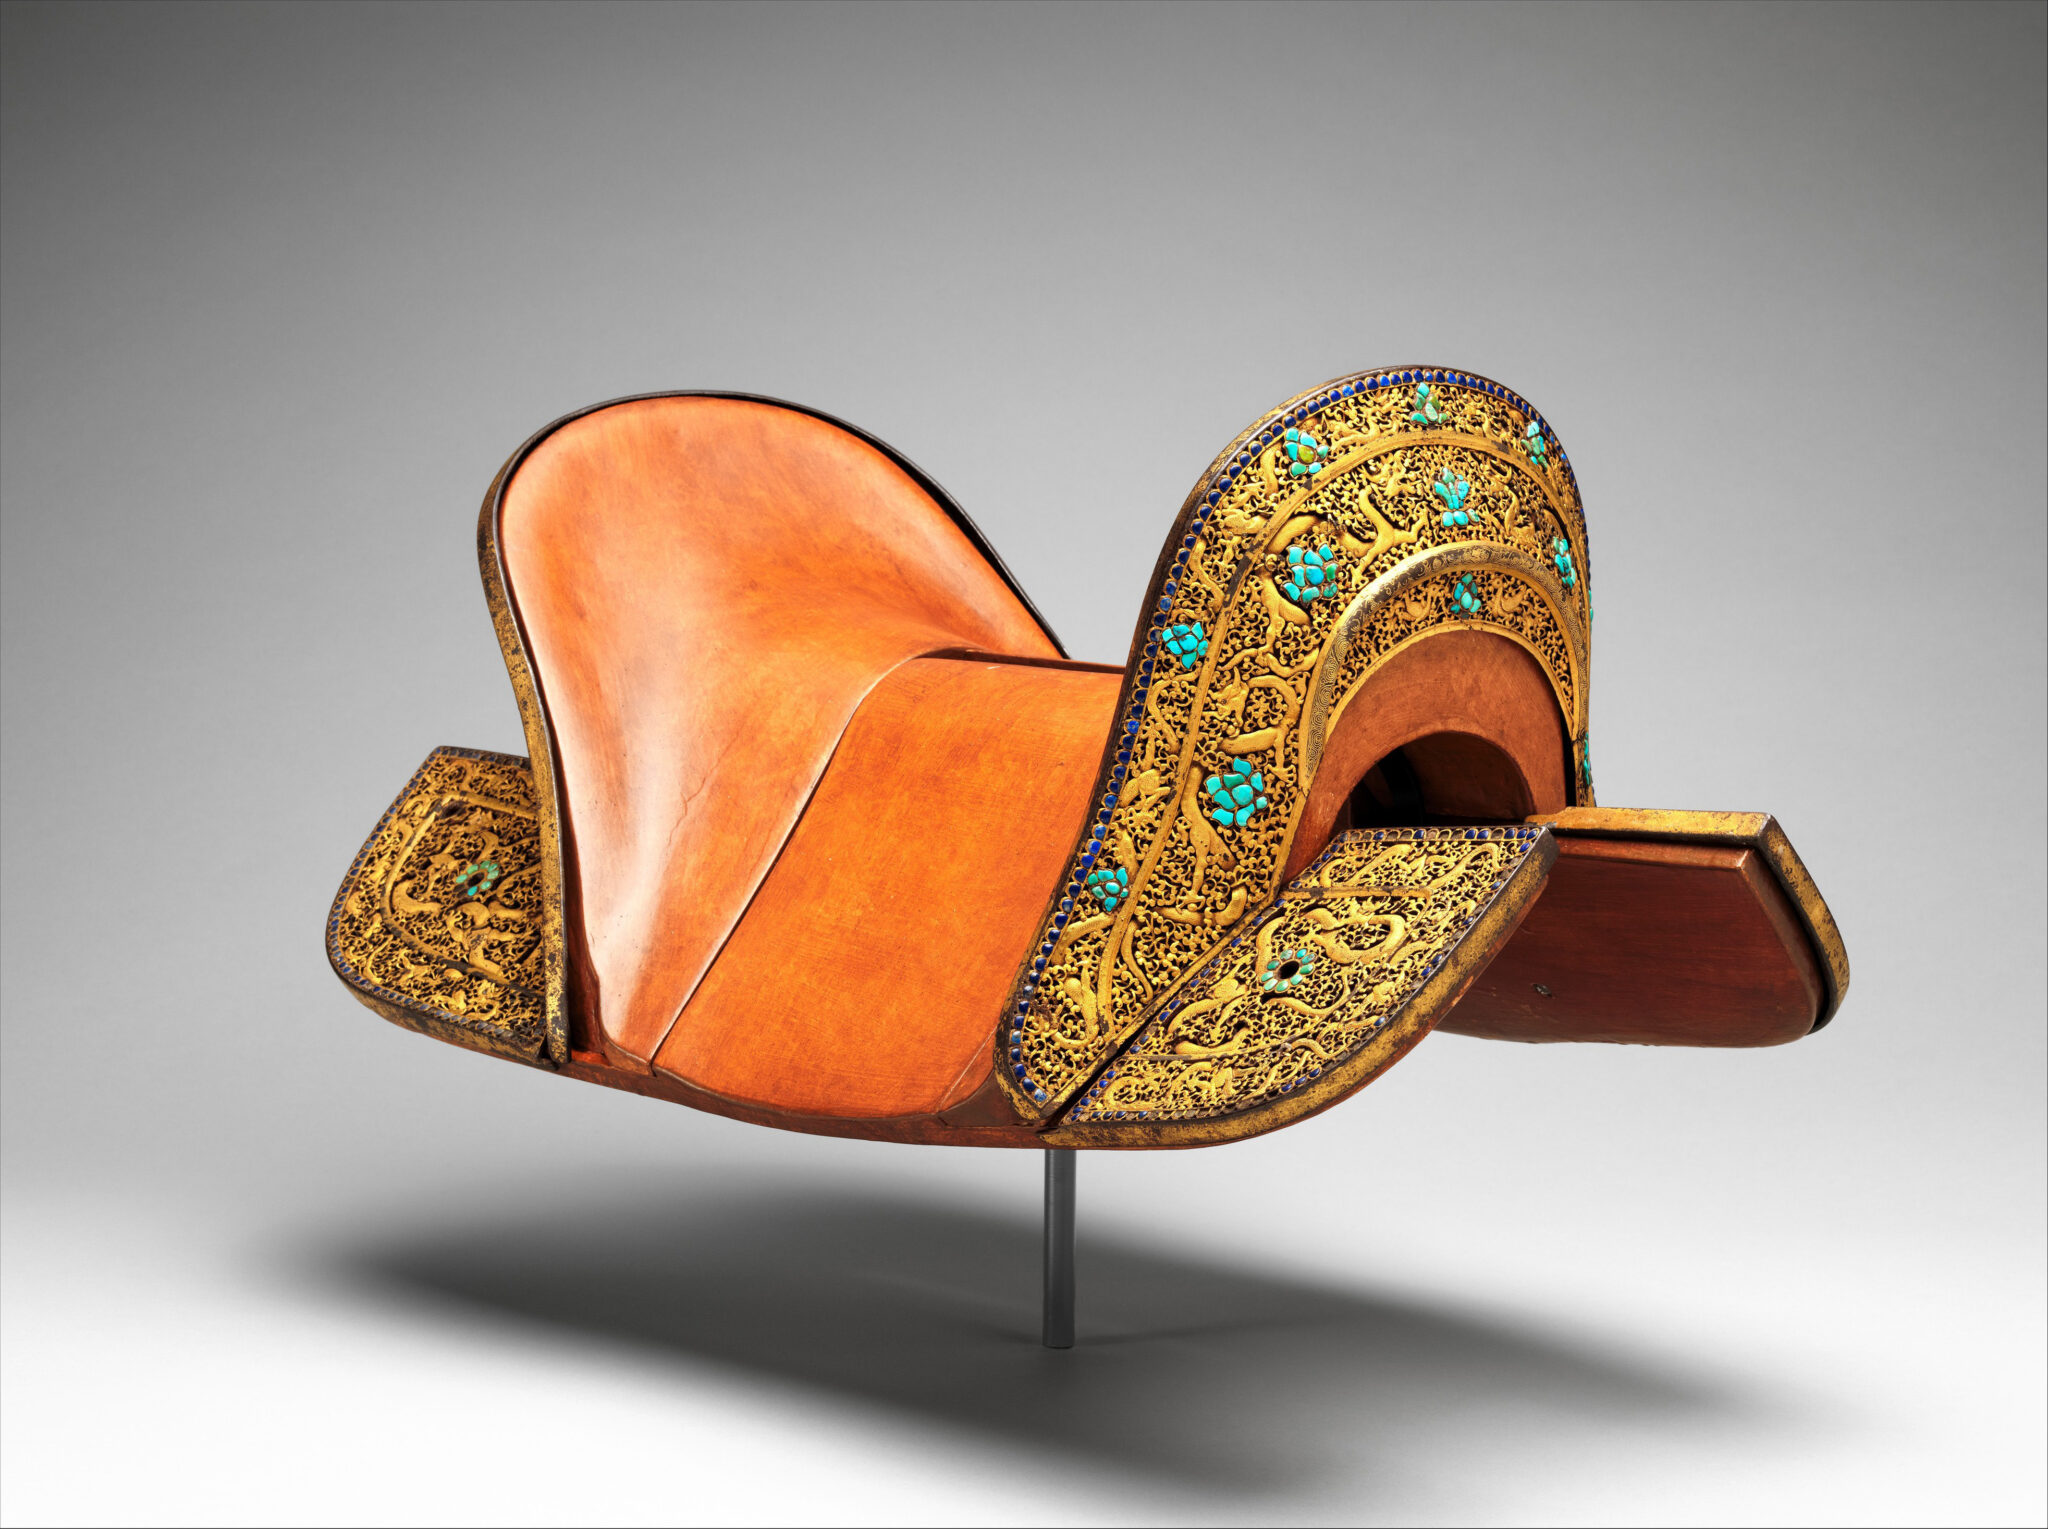 Orange leather saddle featuring gold filigree and turquoise decoration at pommel